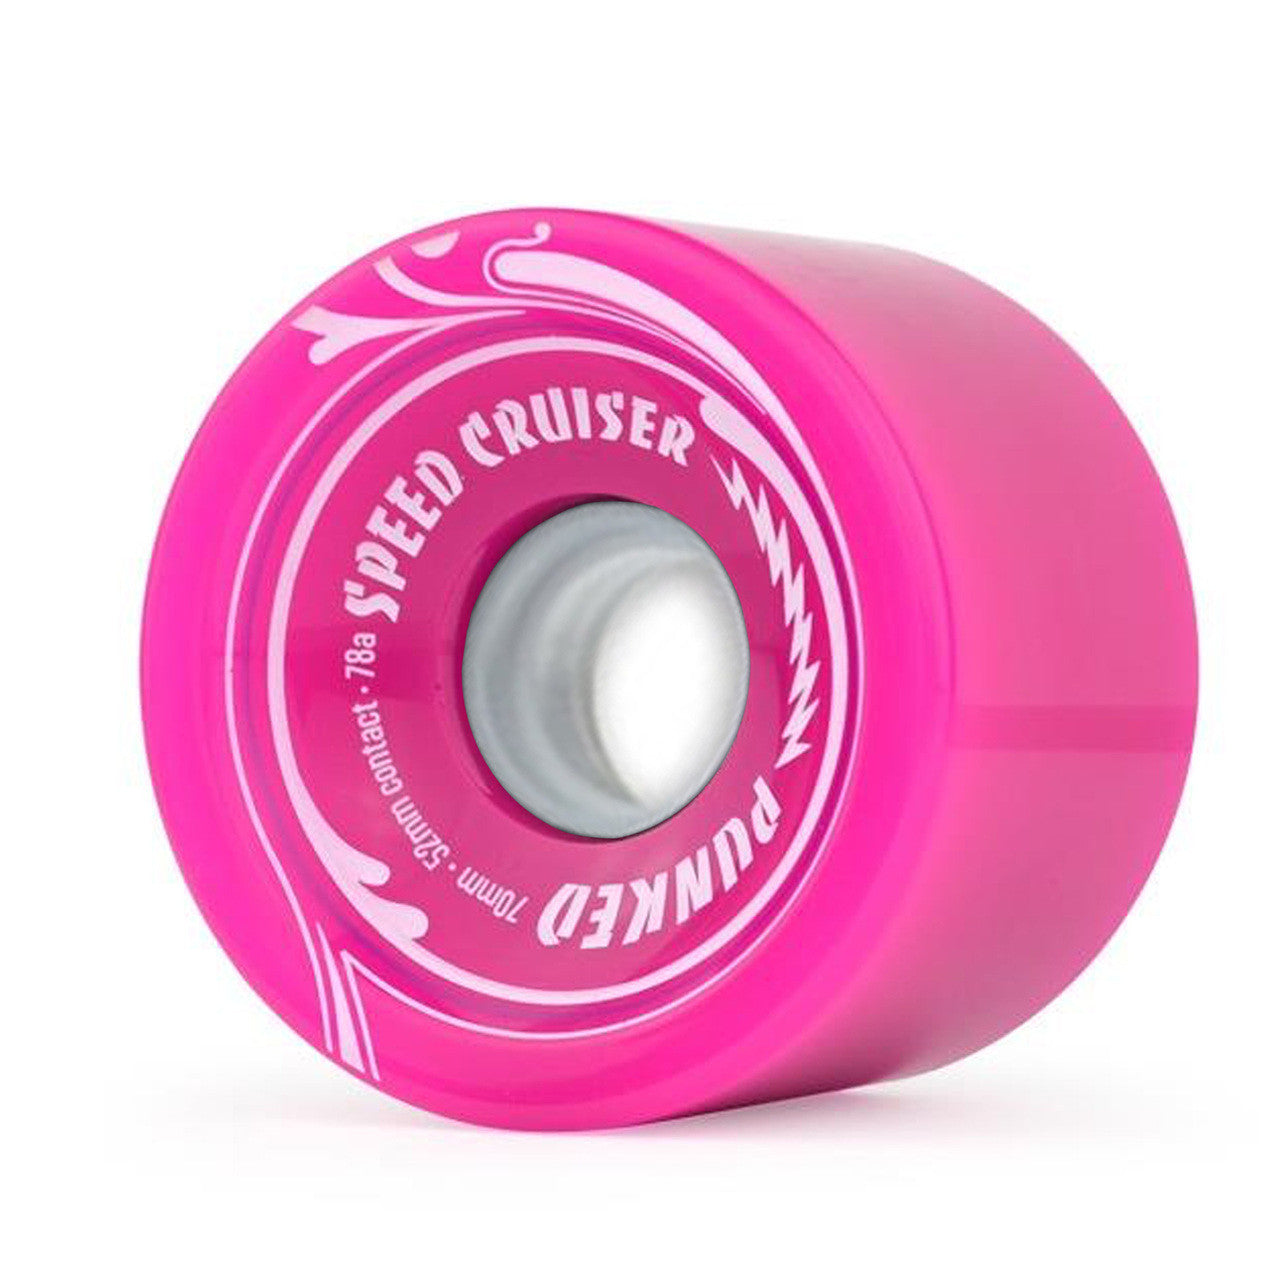 Speed Cruiser 70mm Longboard Wheels - Solid Pink